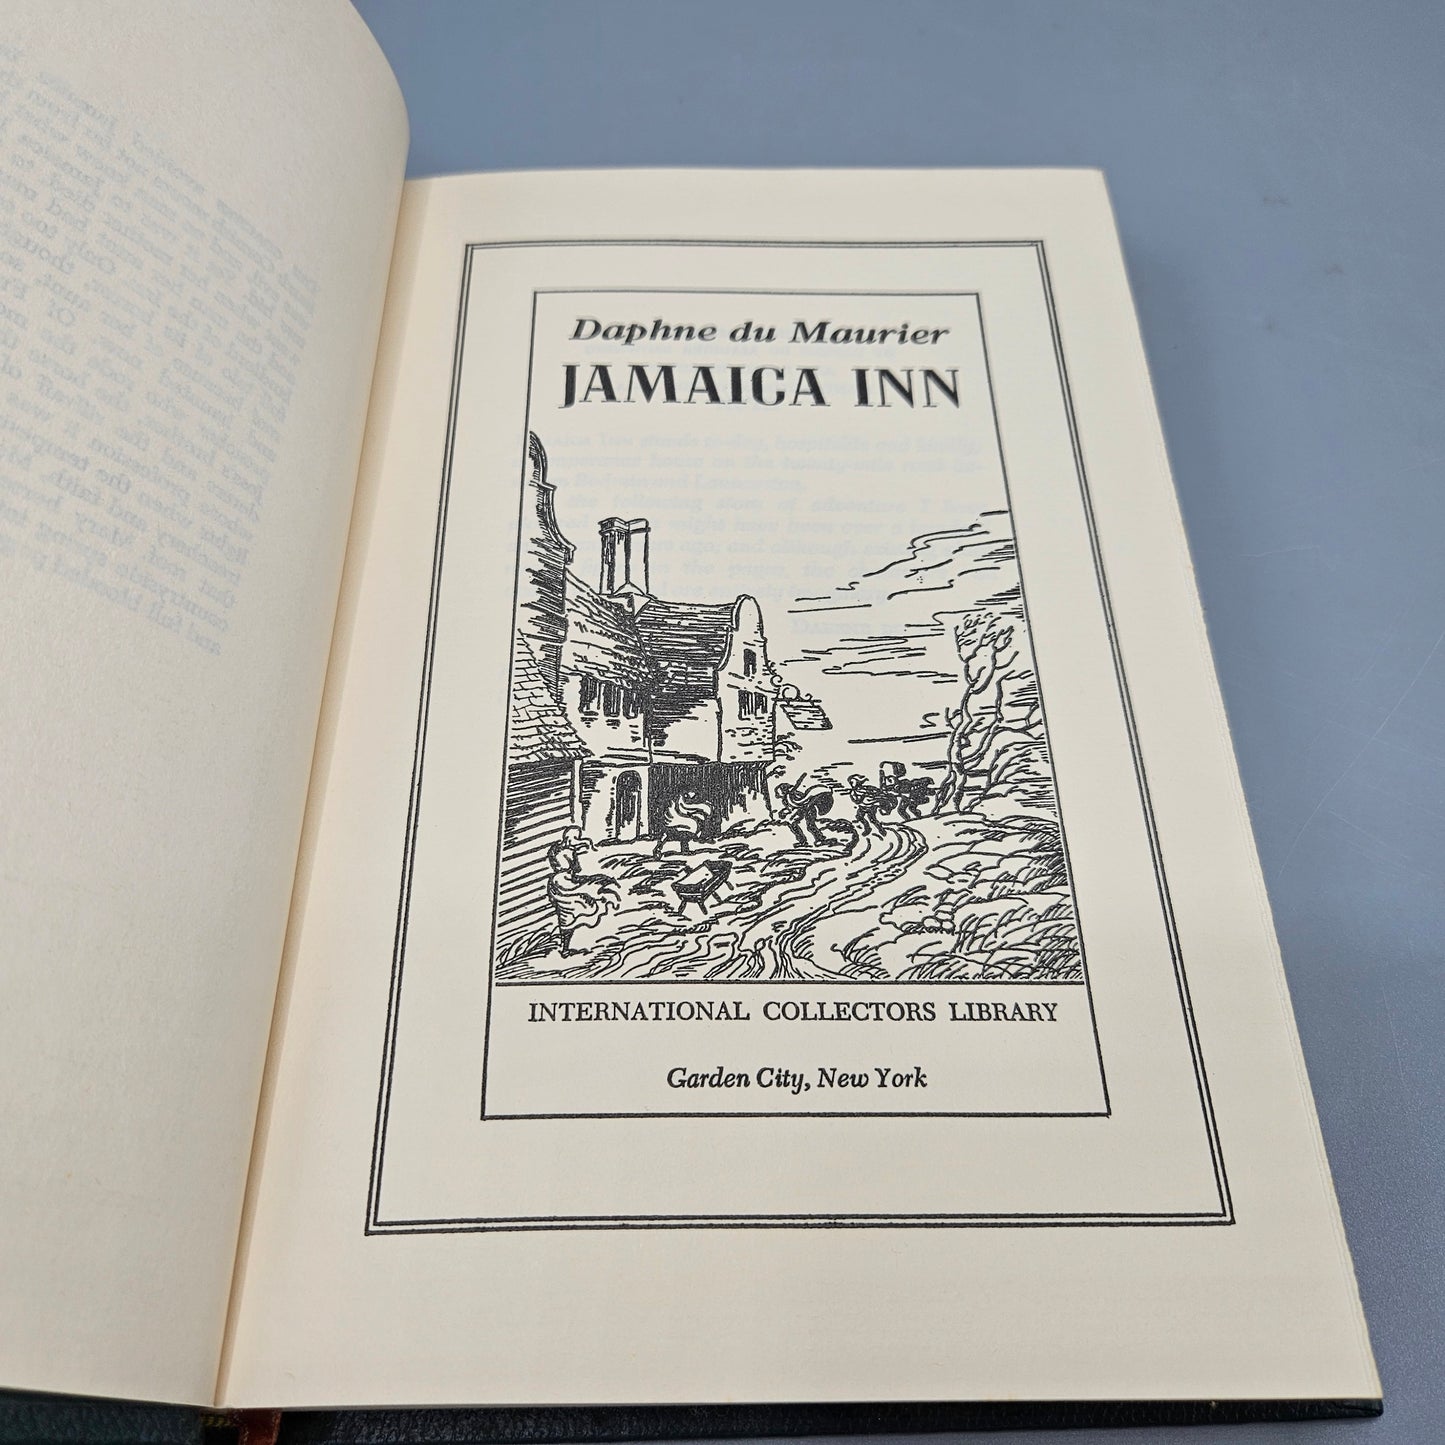 Leatherbound Book Daphne du Maurier "Jamaica Inn"